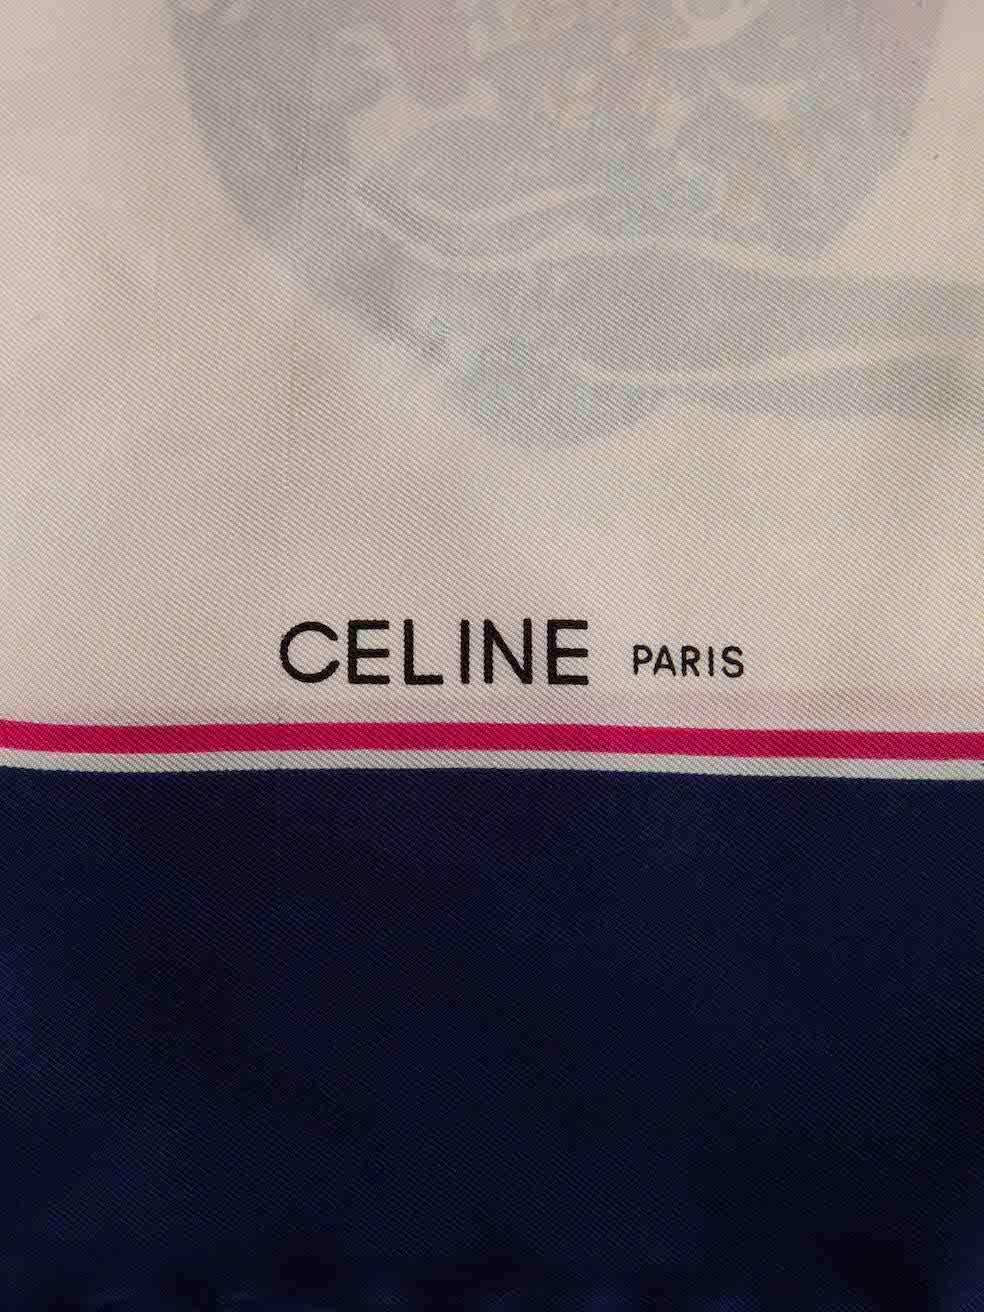 Céline Zodiac Signs Pattern Scarf For Sale 1